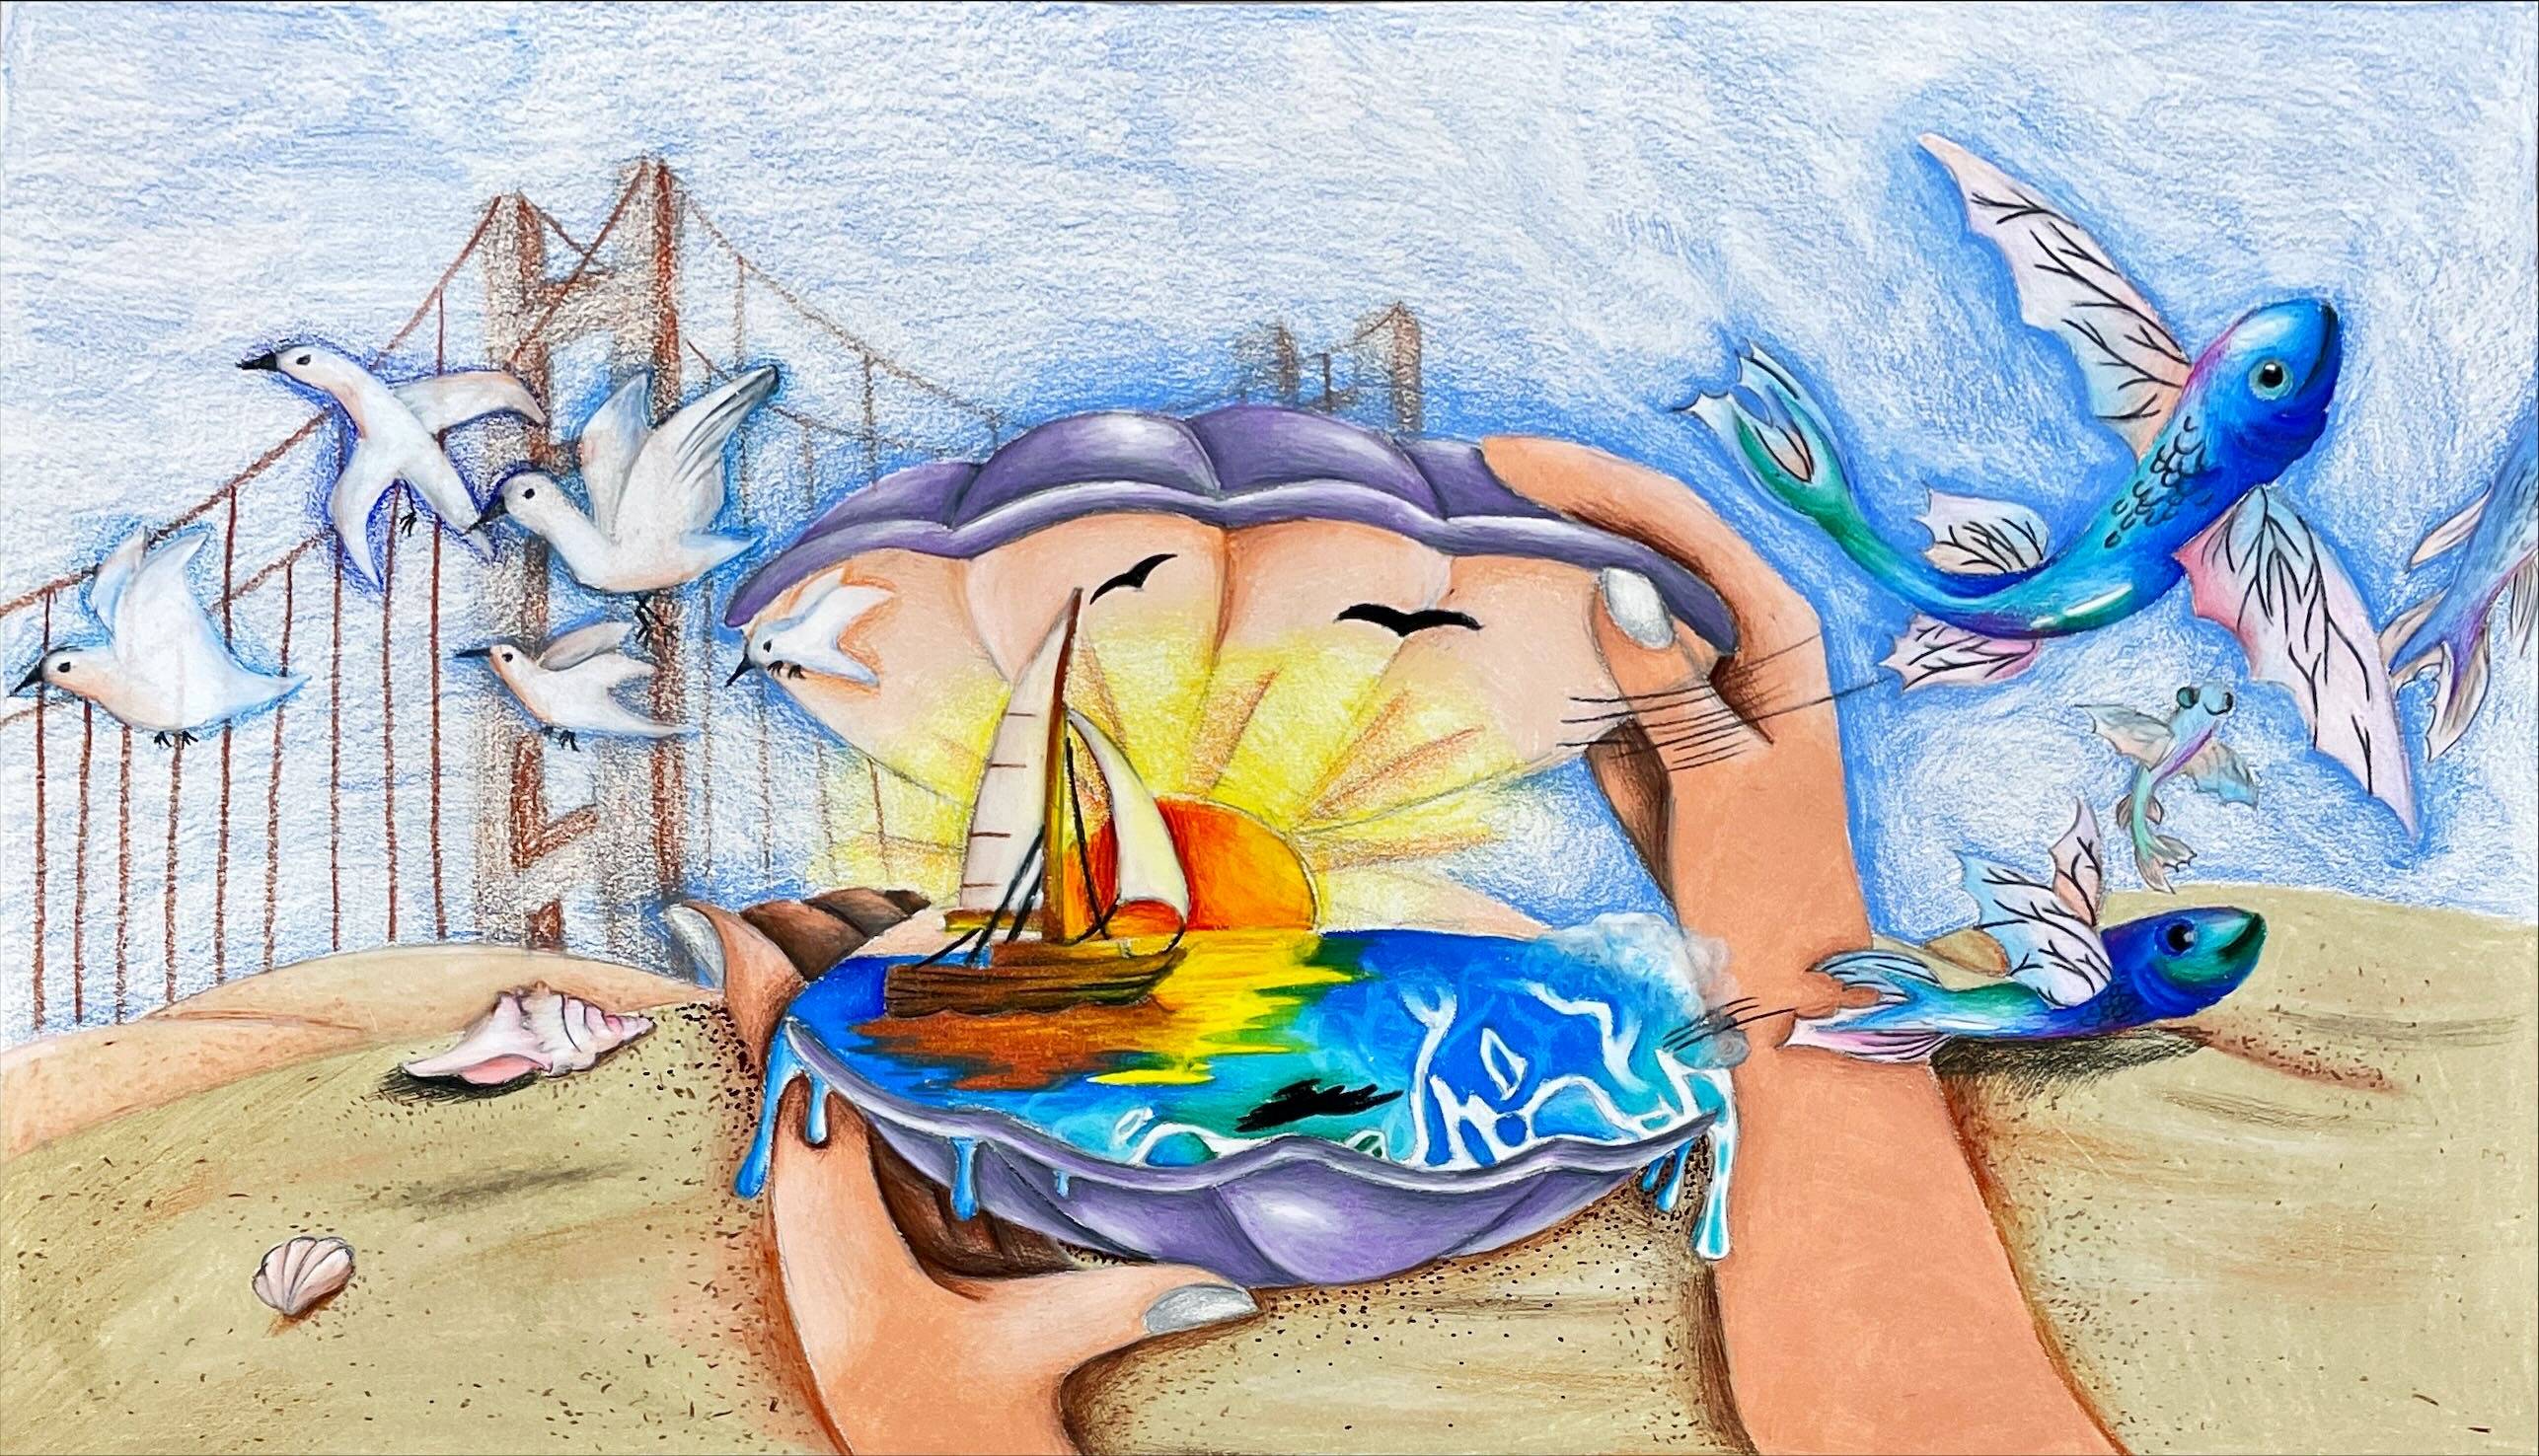 Coastal art - alejez.com